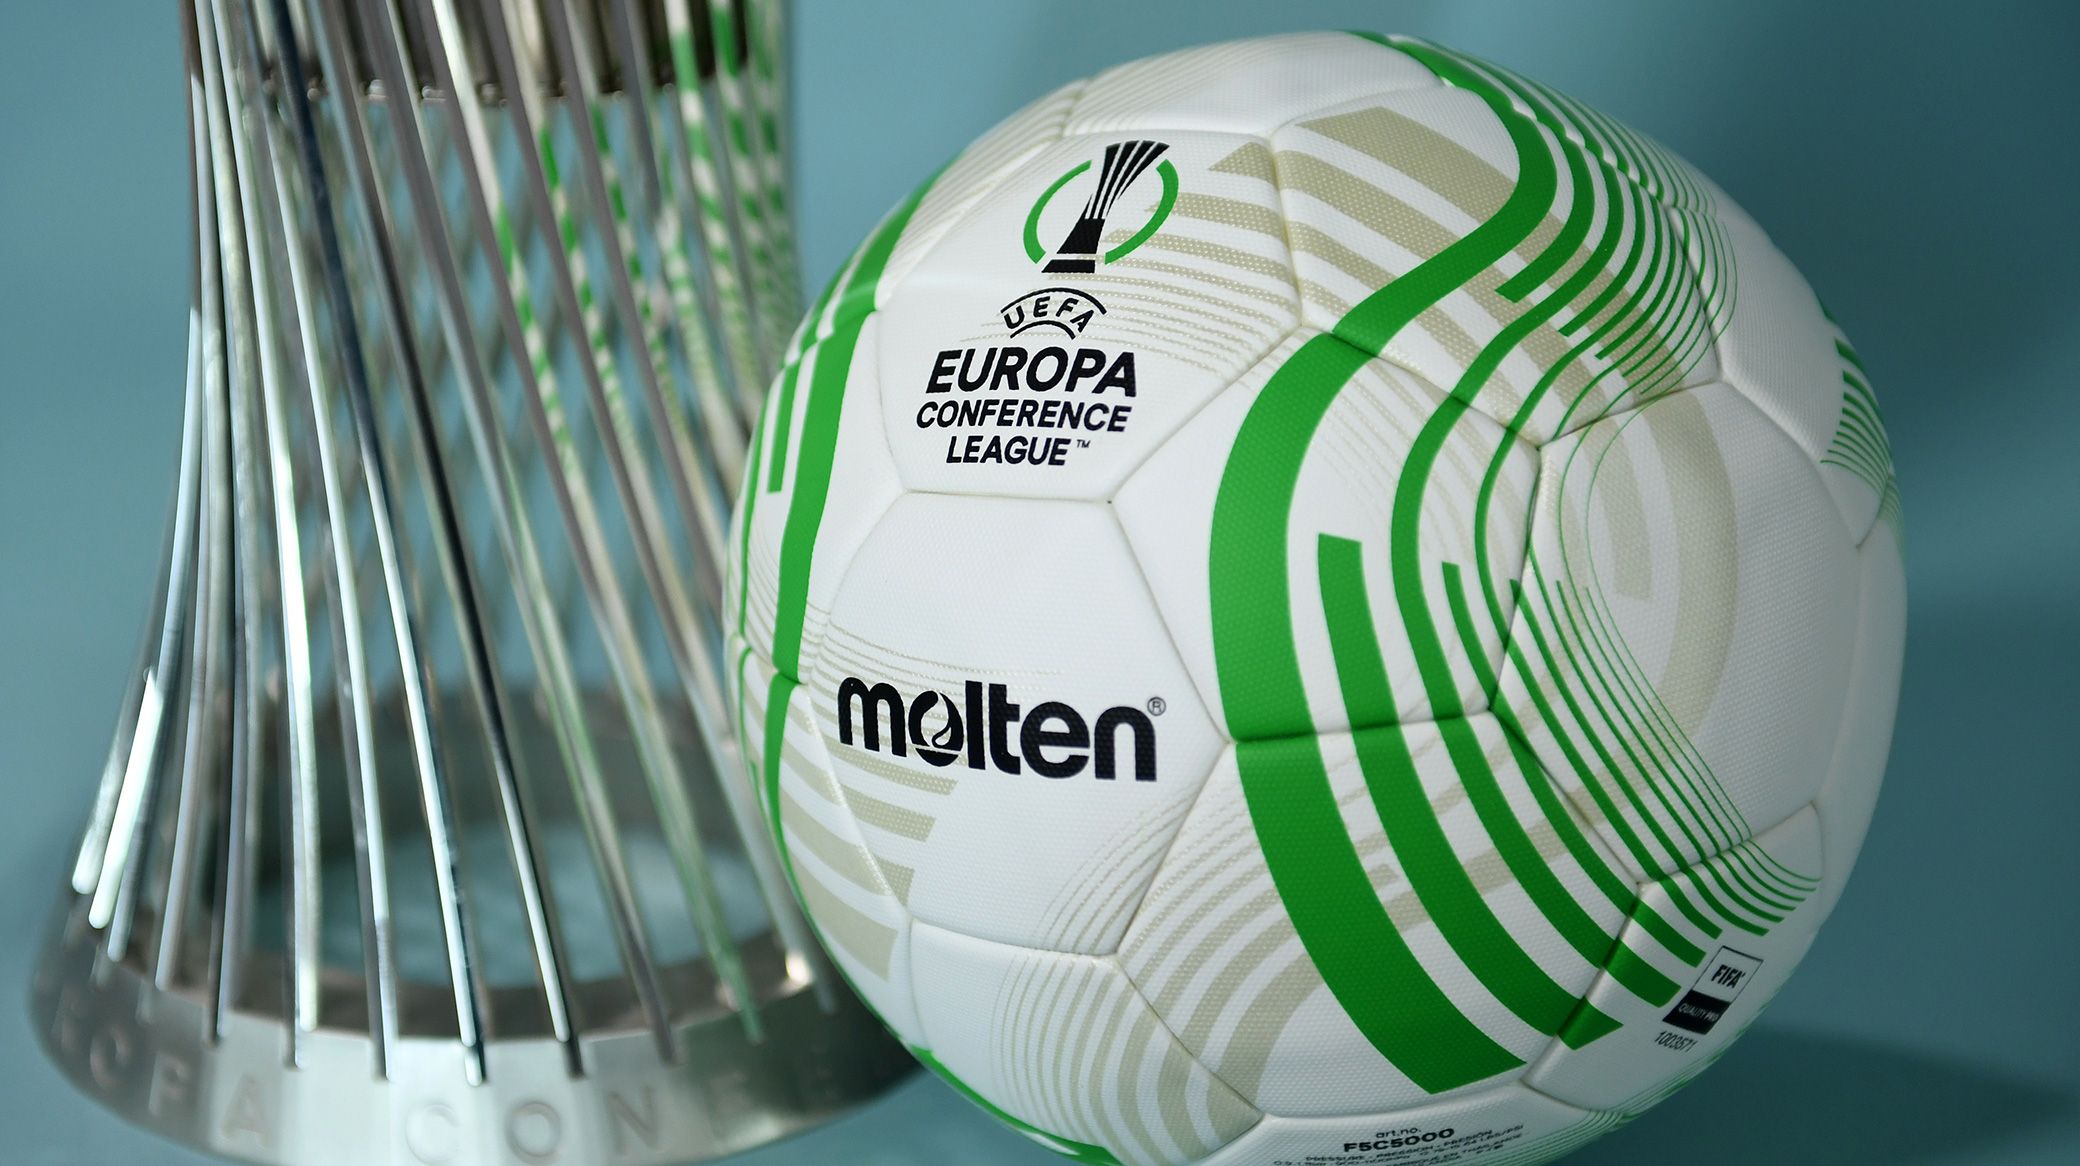 Conference fixtures europa league